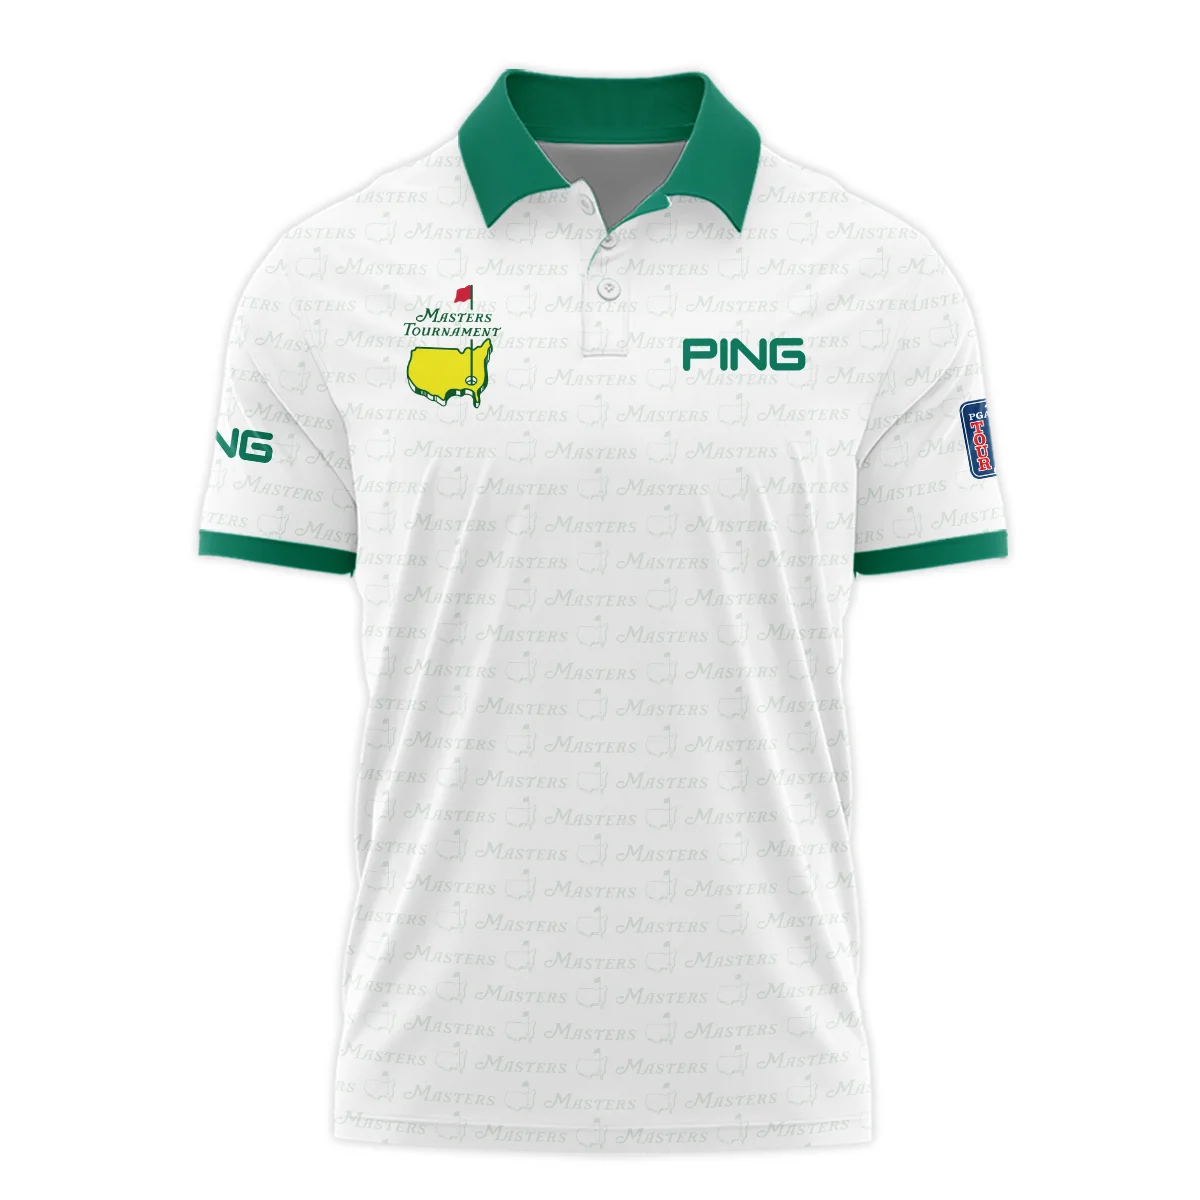 Pattern Masters Tournament Ping Unisex T-Shirt White Green Sport Love Clothing T-Shirt